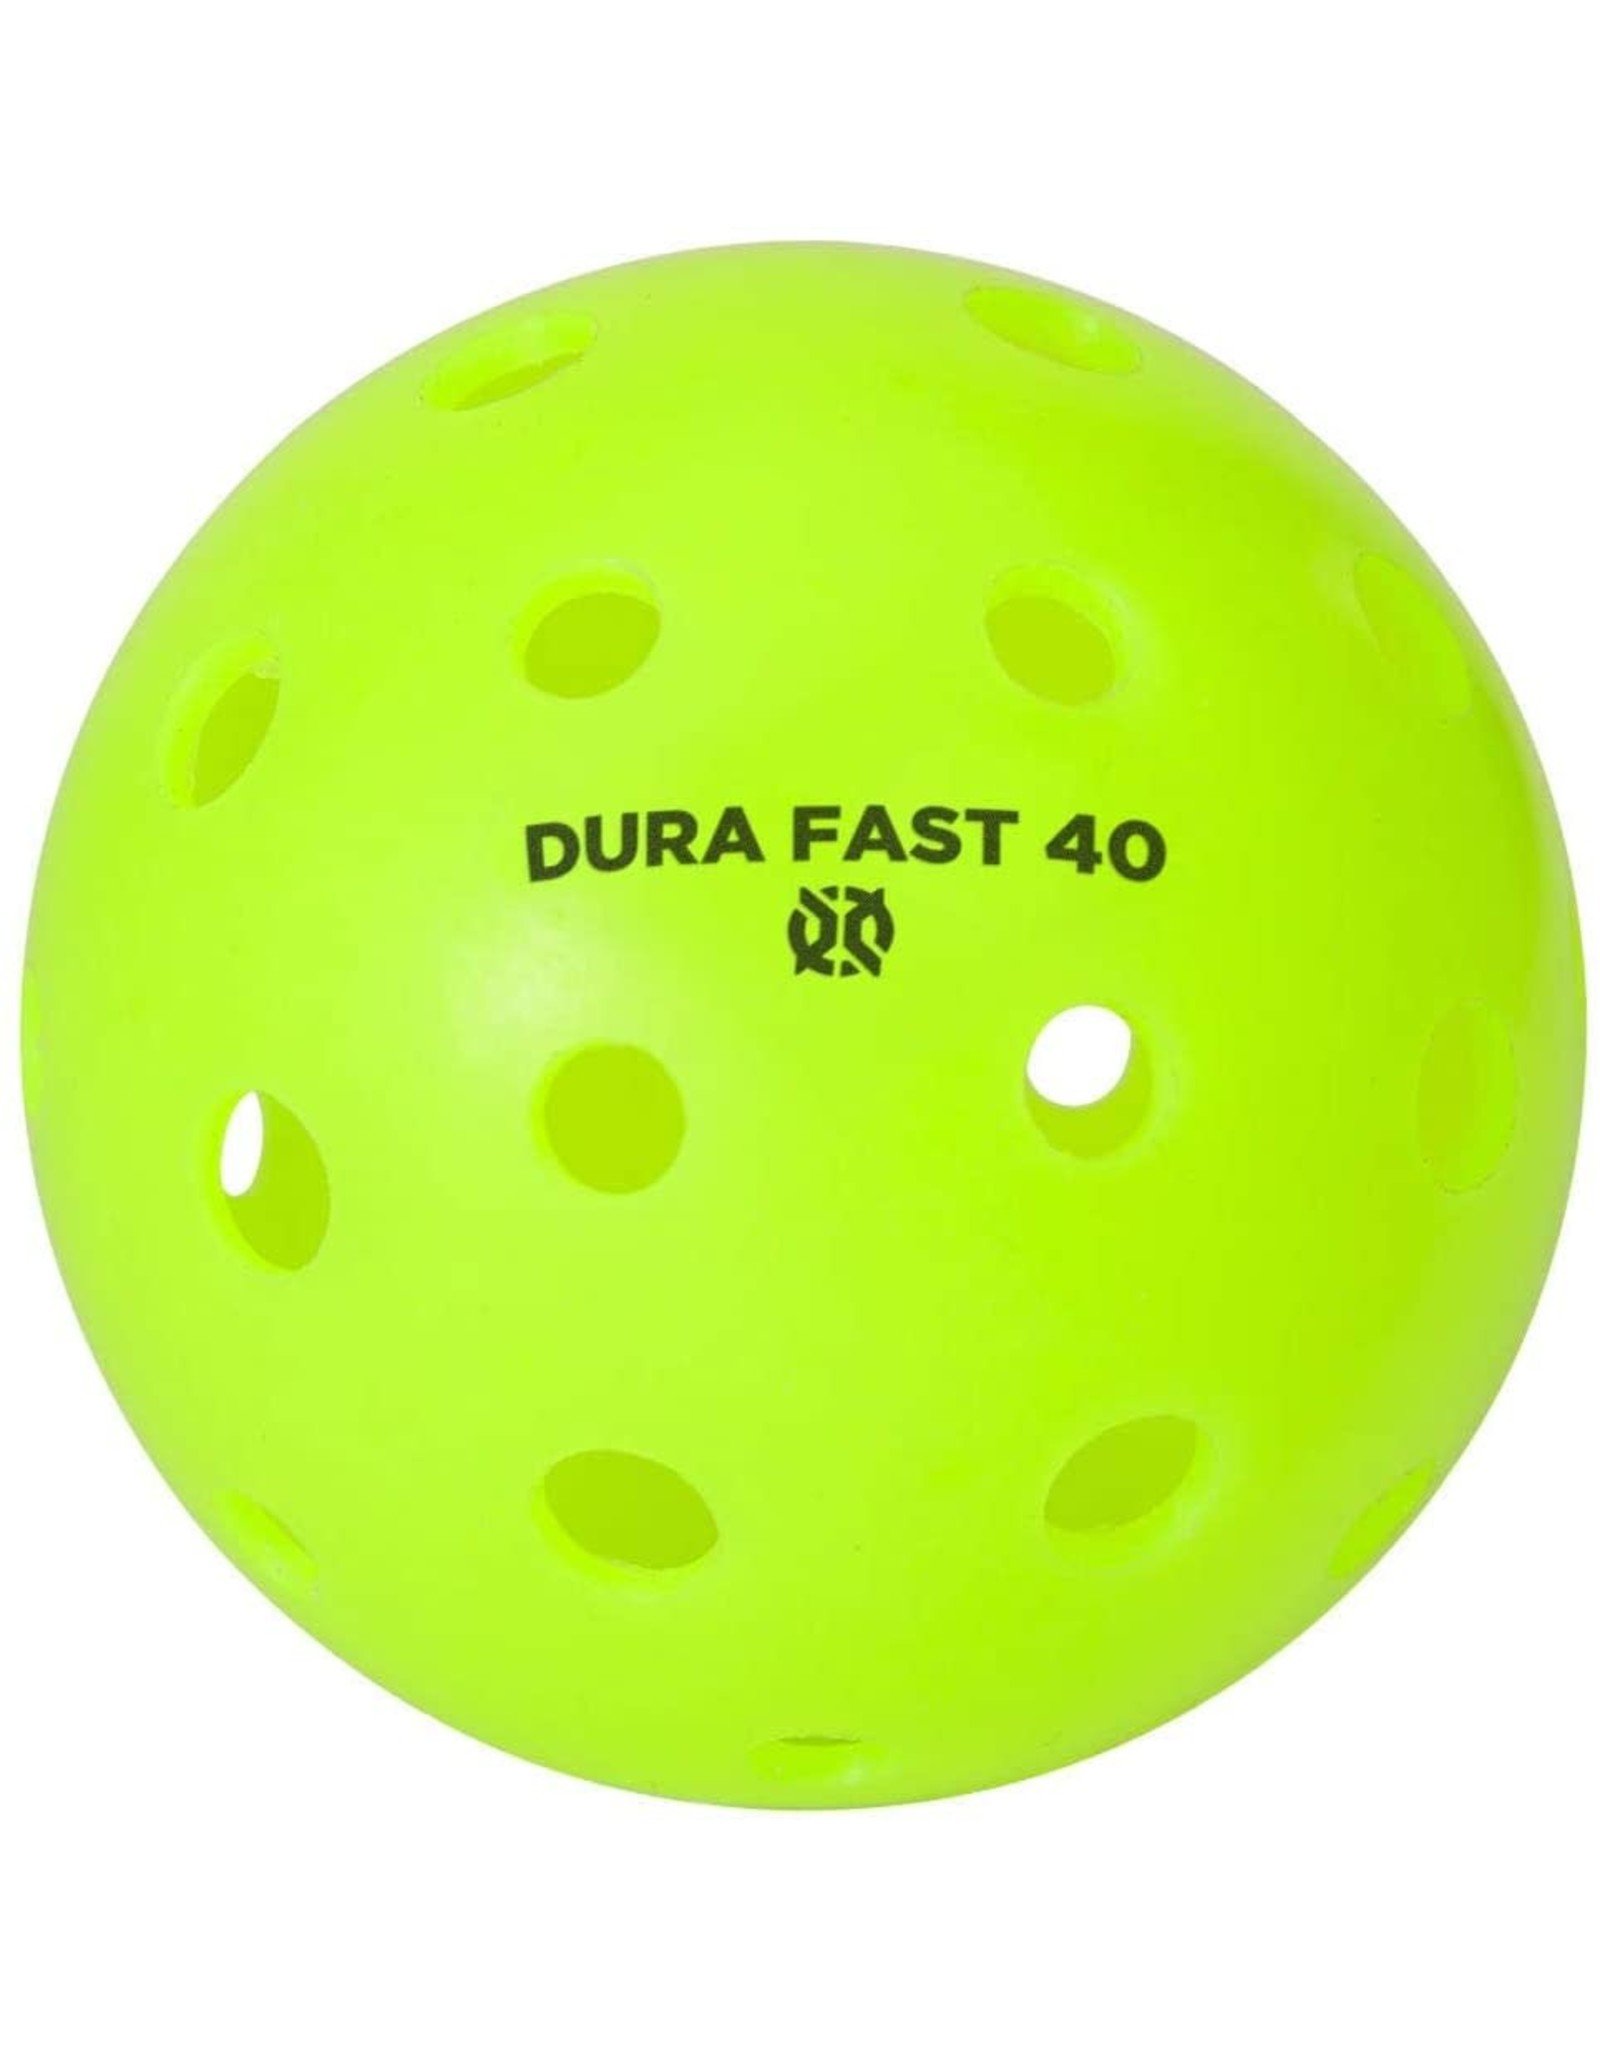 Dura Fast 40 (Outdoor)